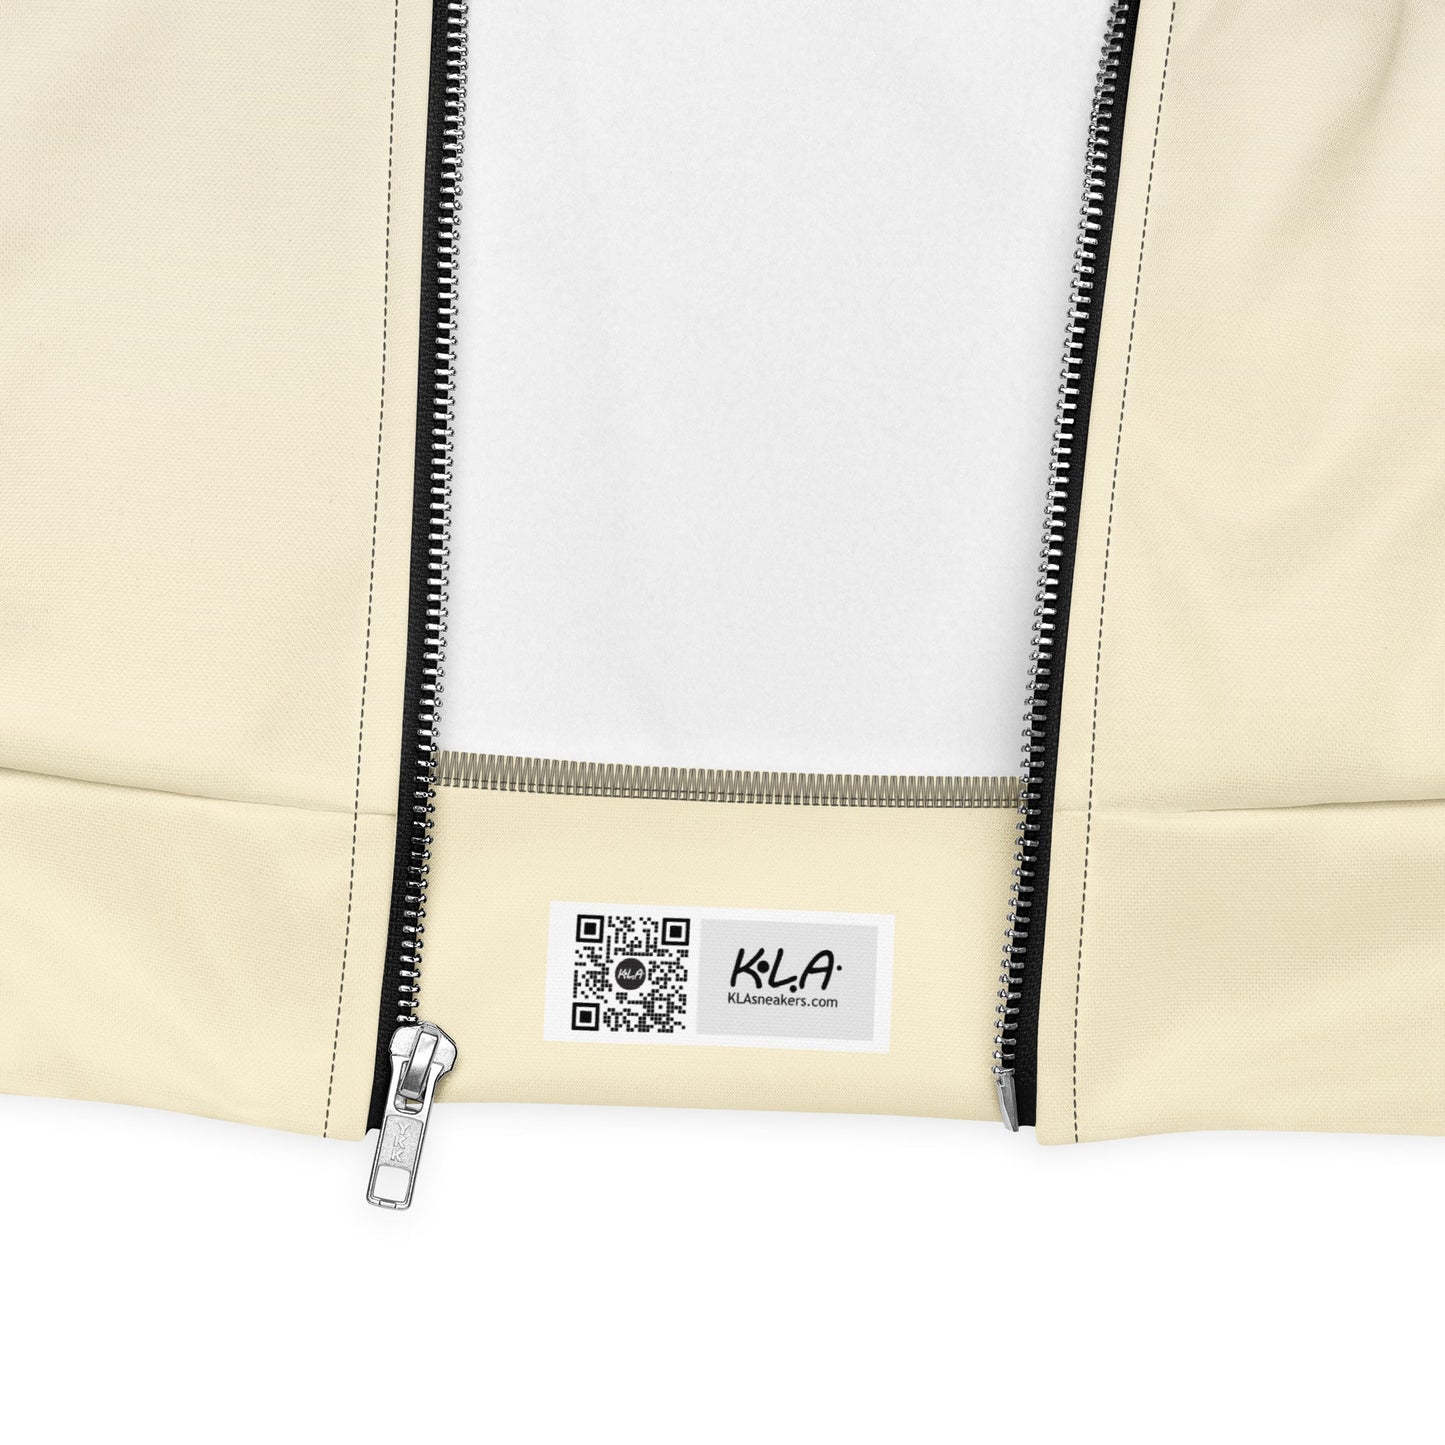 klasneakers KLA Unisex Bomber Jacket - Gray to Cream Ombre